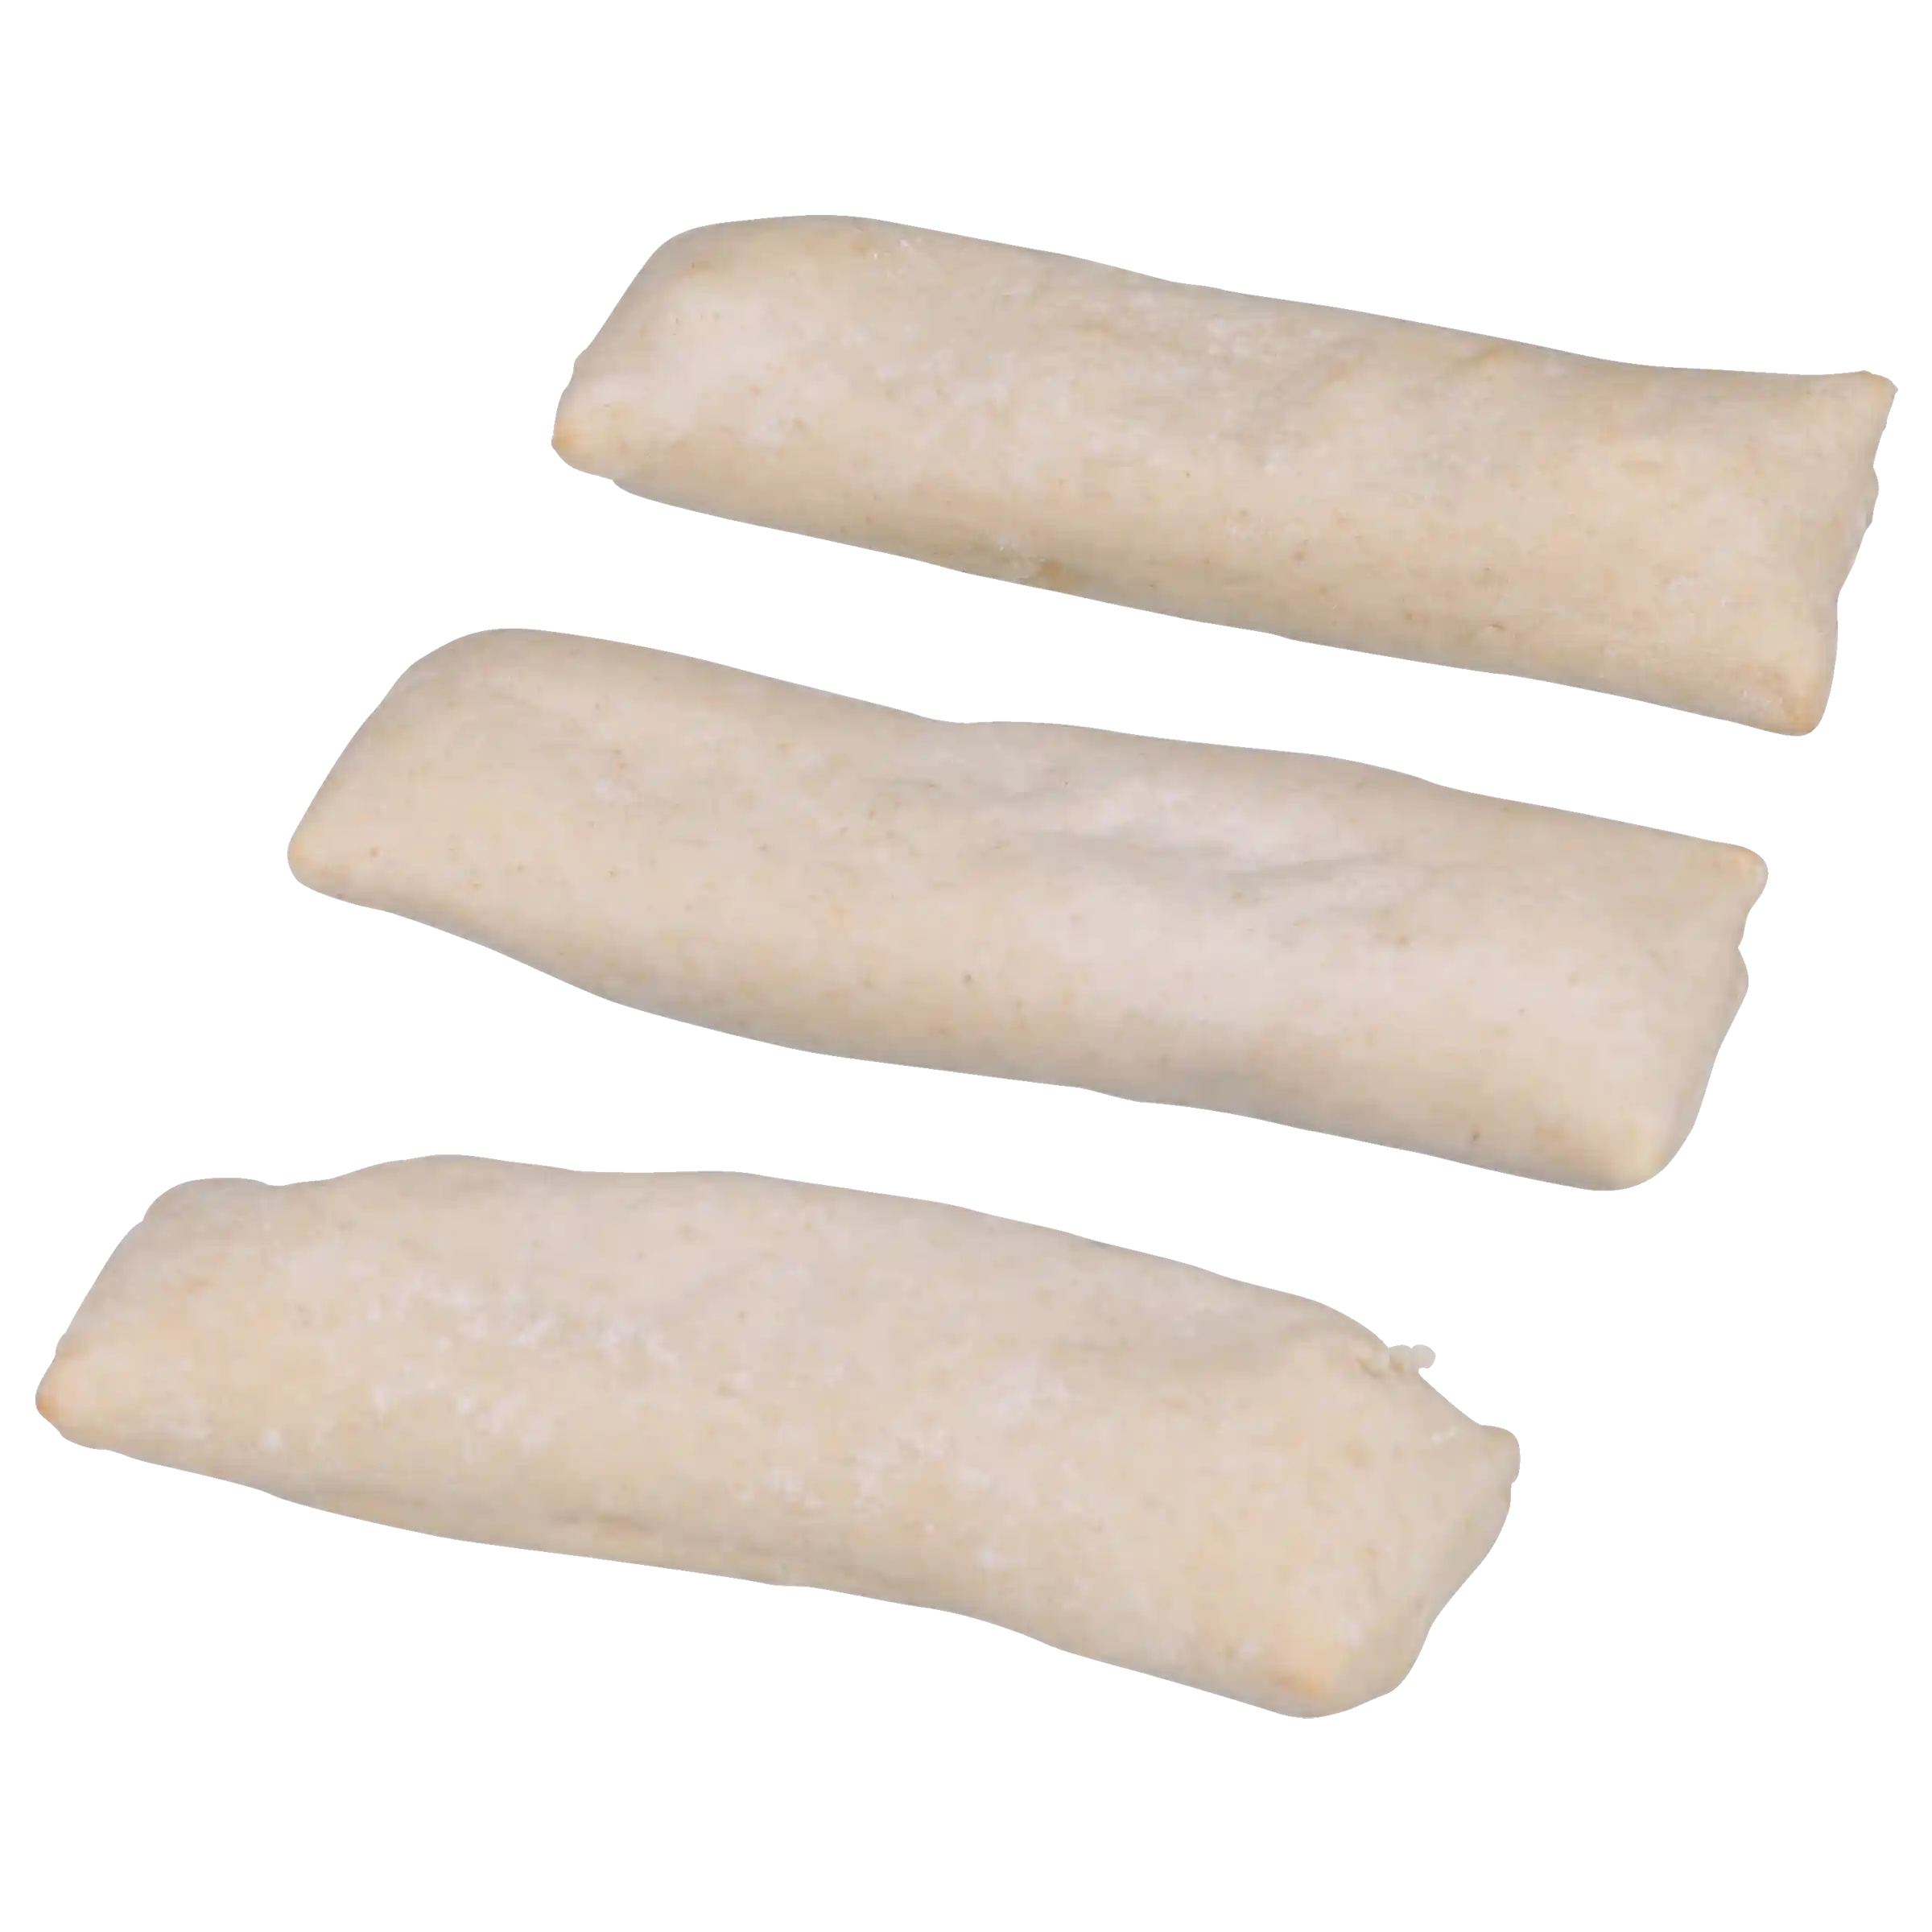 Bosco® Whole Grain 100% LMPS Cheese Stuffed Breadsticks, 2.15 oz.https://images.salsify.com/image/upload/s--vq6taNAK--/q_25/j8ig3exmcnlipulqy0bx.webp